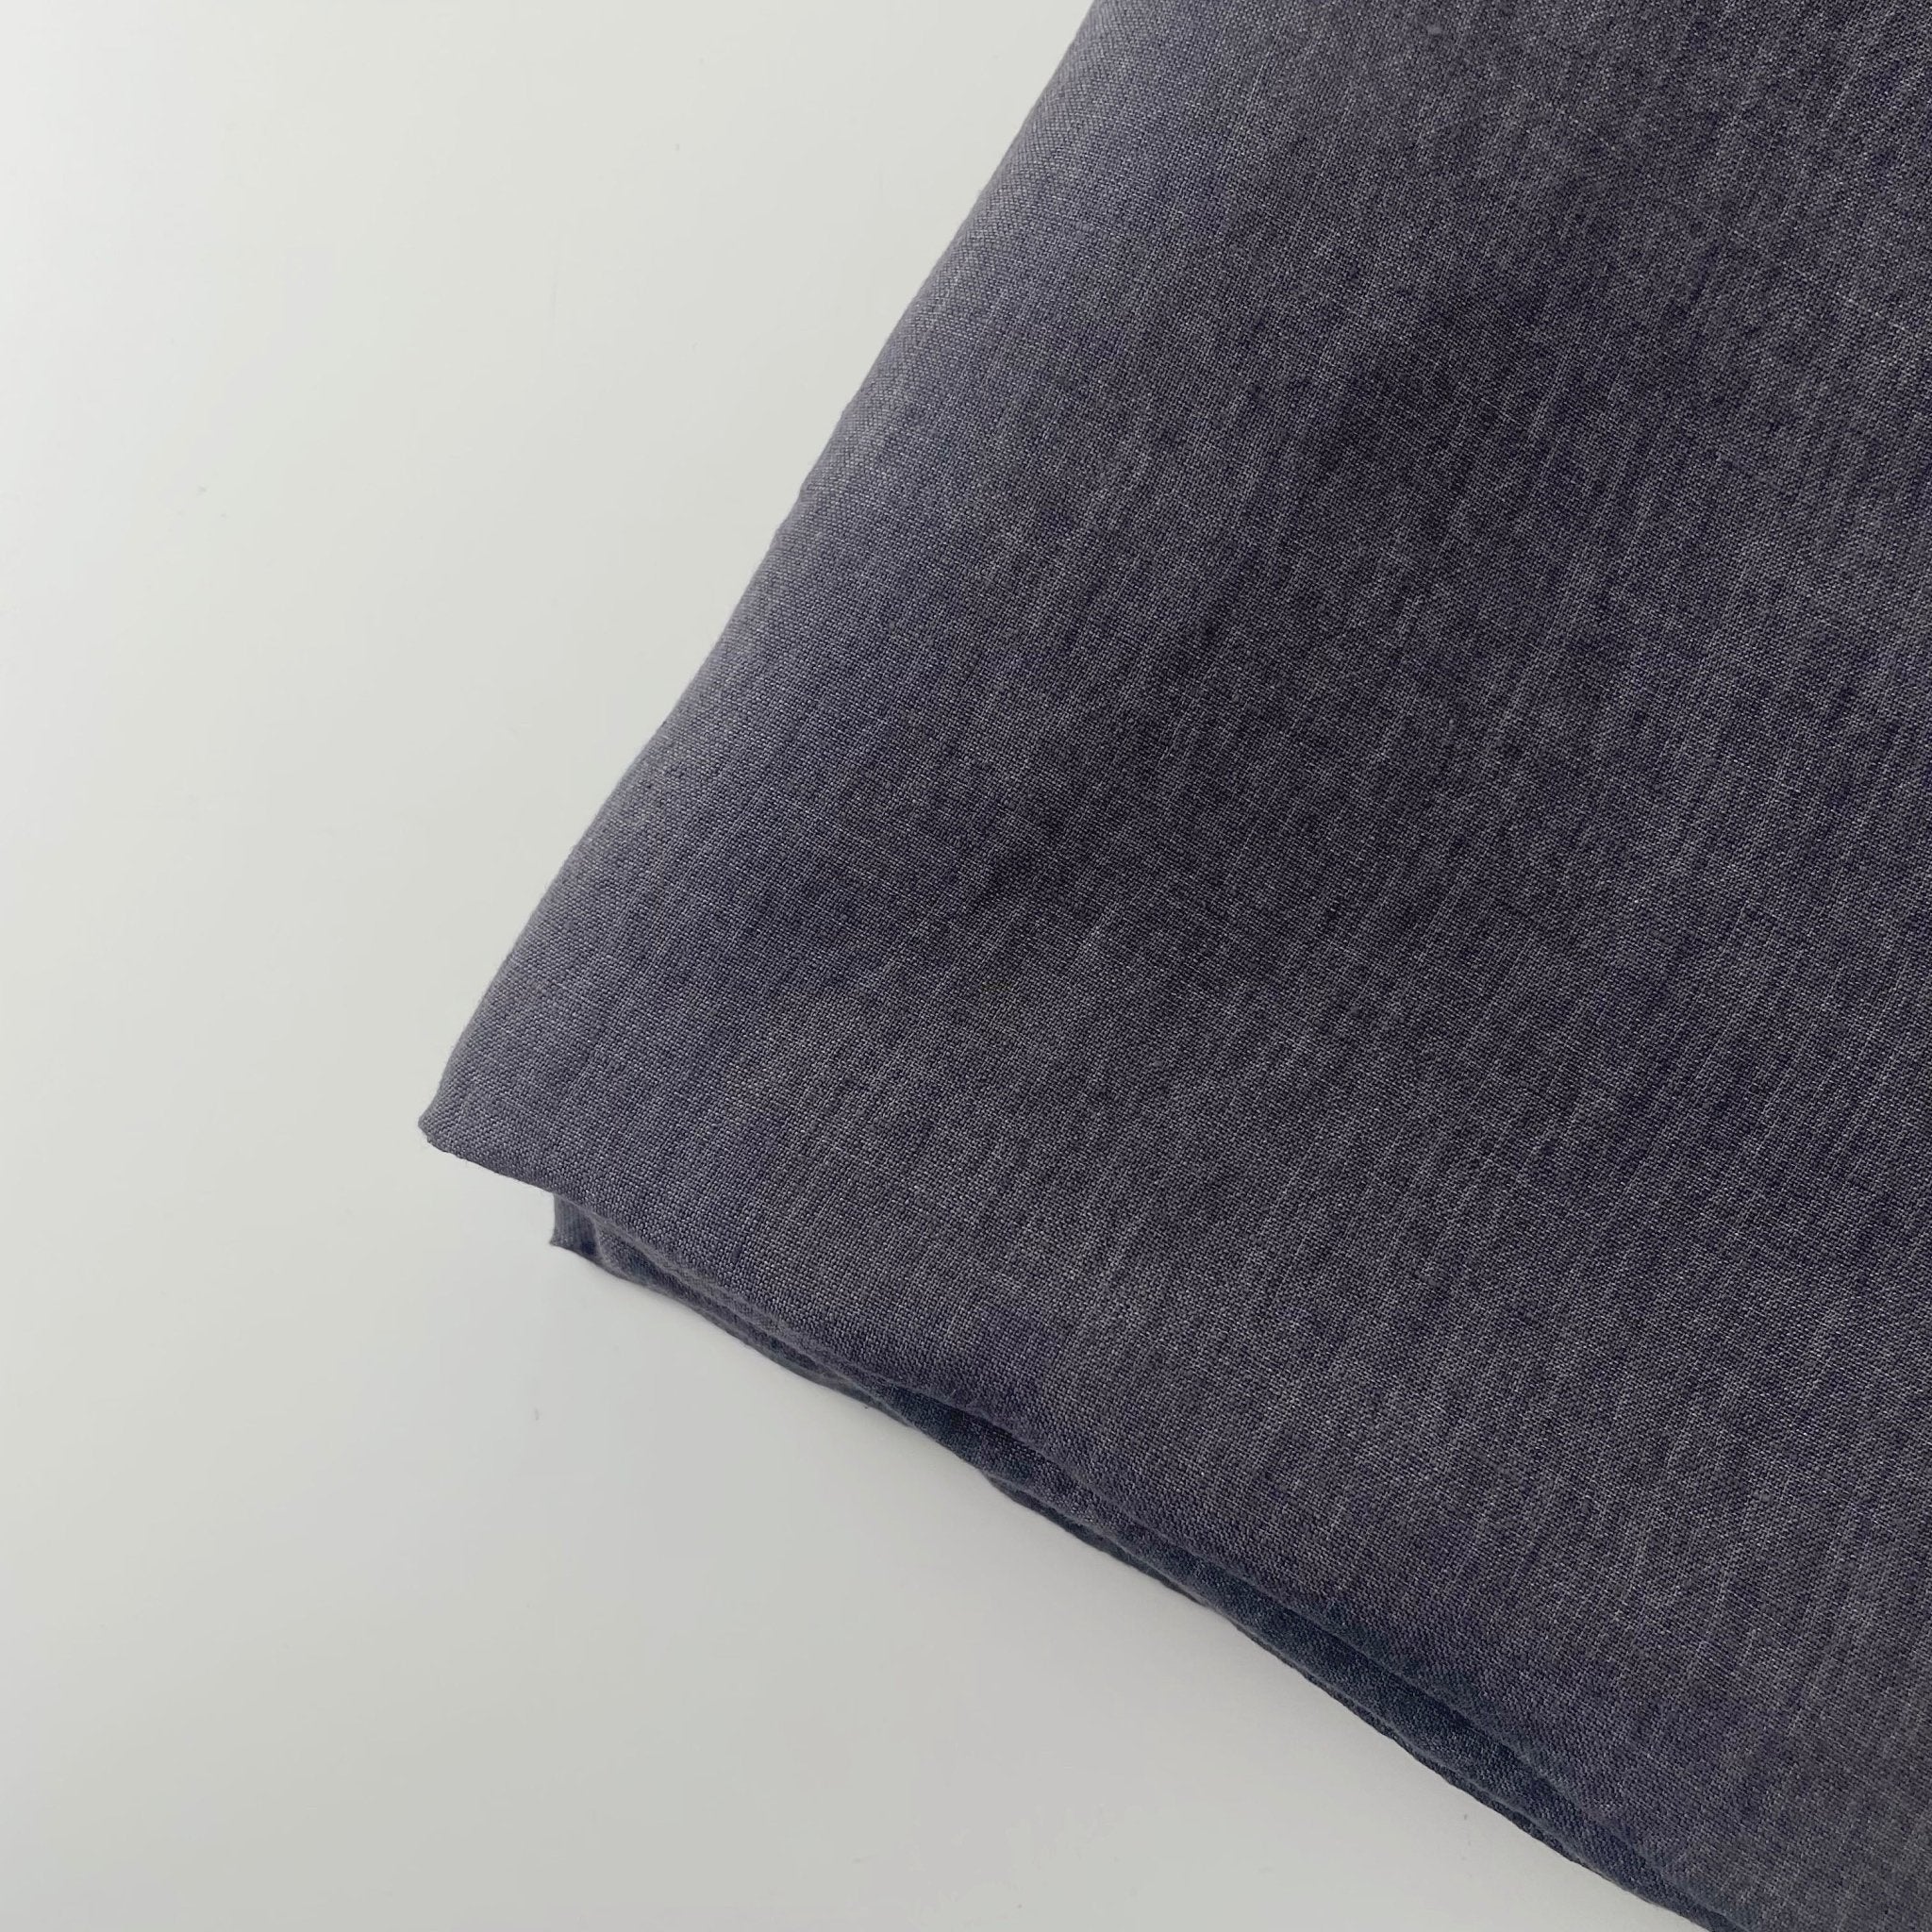 Linen Fabric Light Weight Soft Touch 21S 7365 7366 7260 - The Linen Lab - Grey